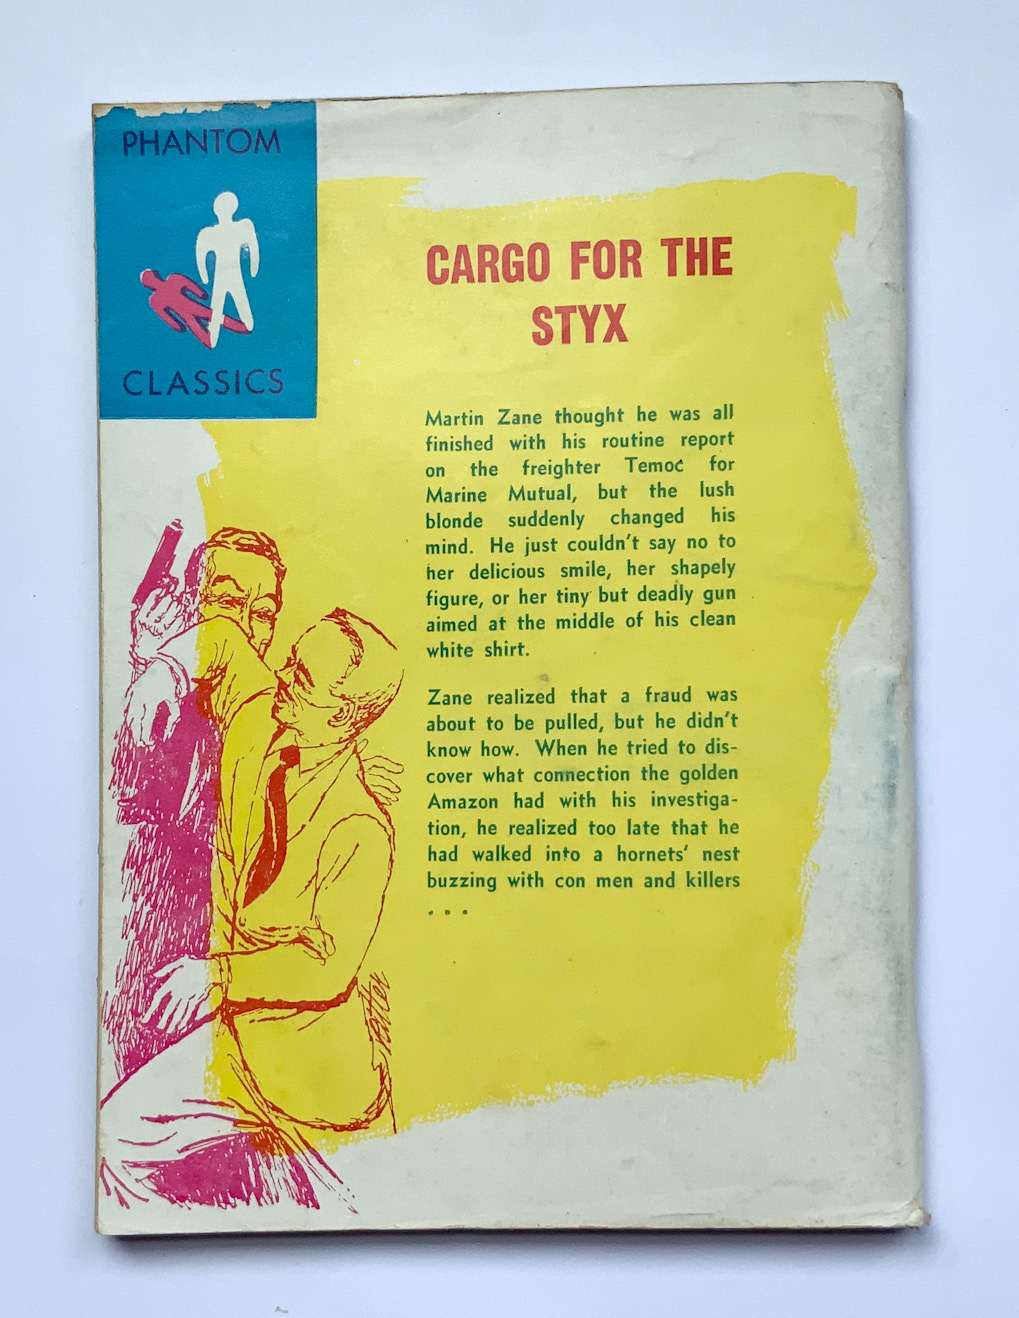 CARGO FOR THE STYX Australian crime pulp fiction book by Louis Trimble 1961